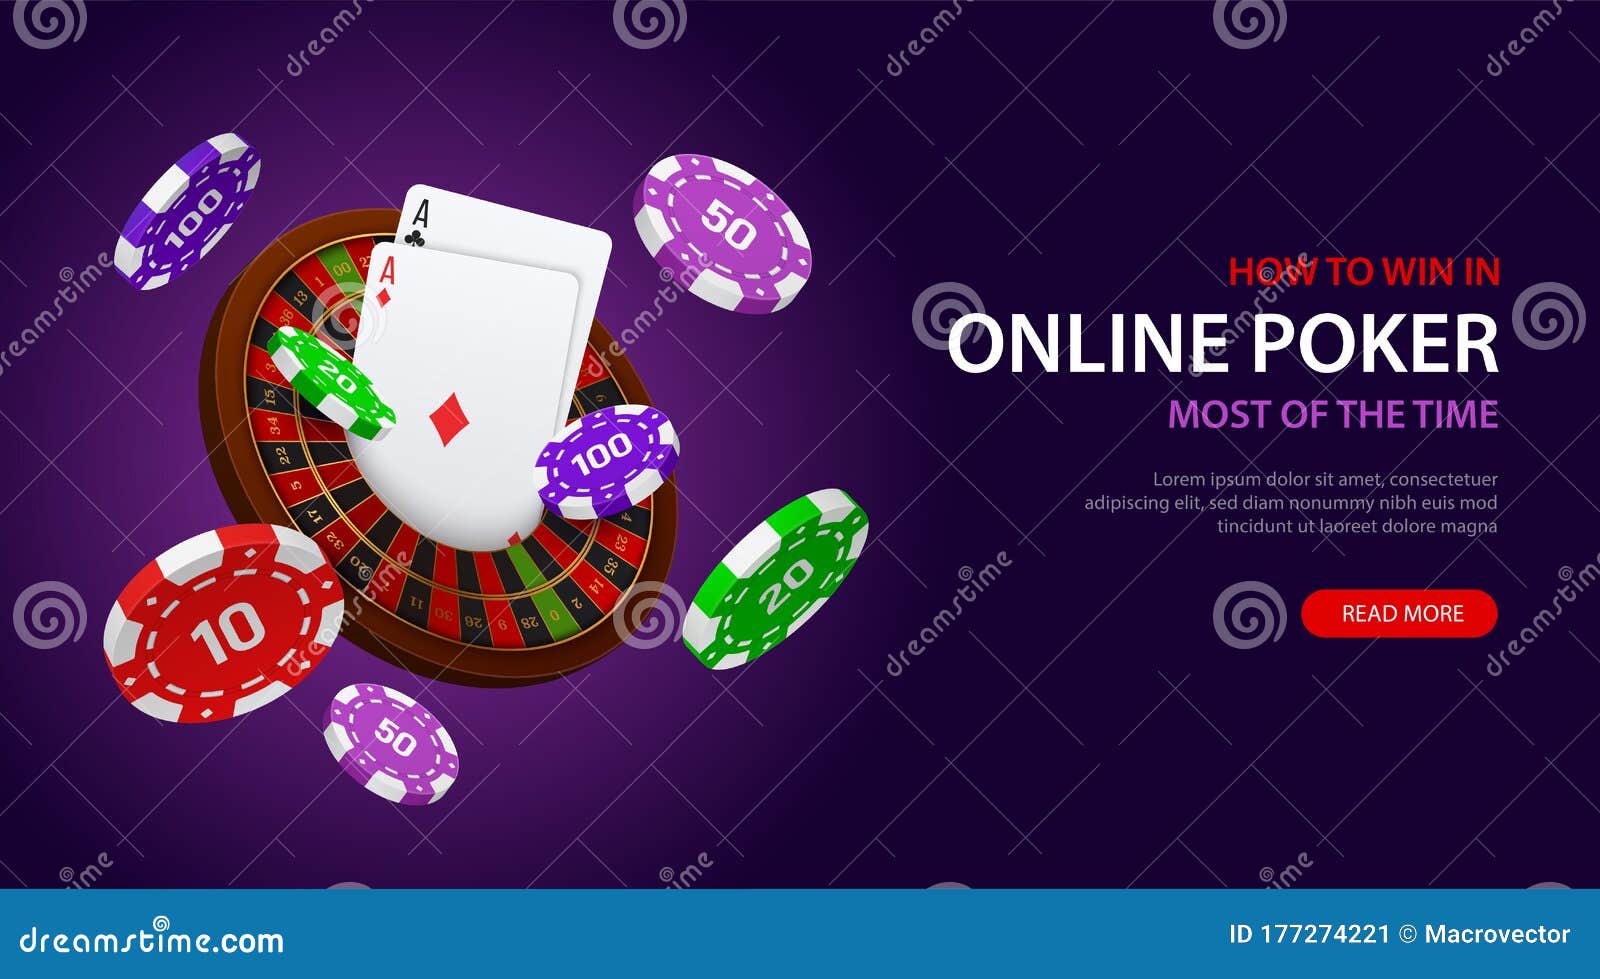 Онлайн покер по сети фонбет самара вакансии